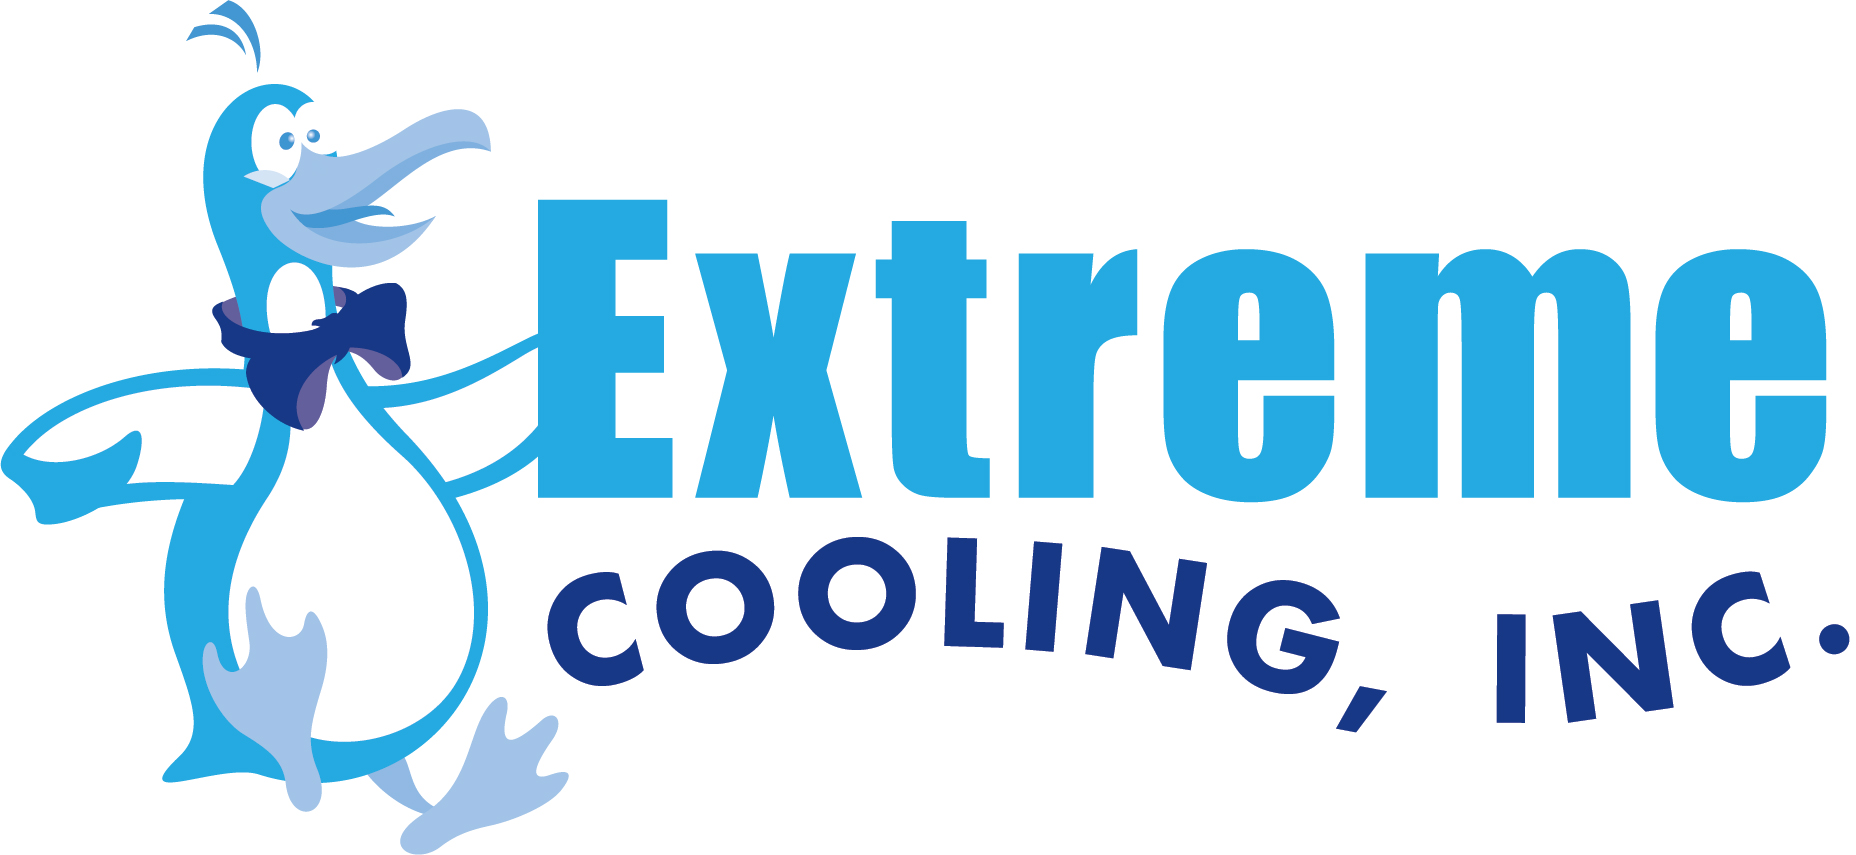 Extreme Cooling Simplified Logo No Slogan